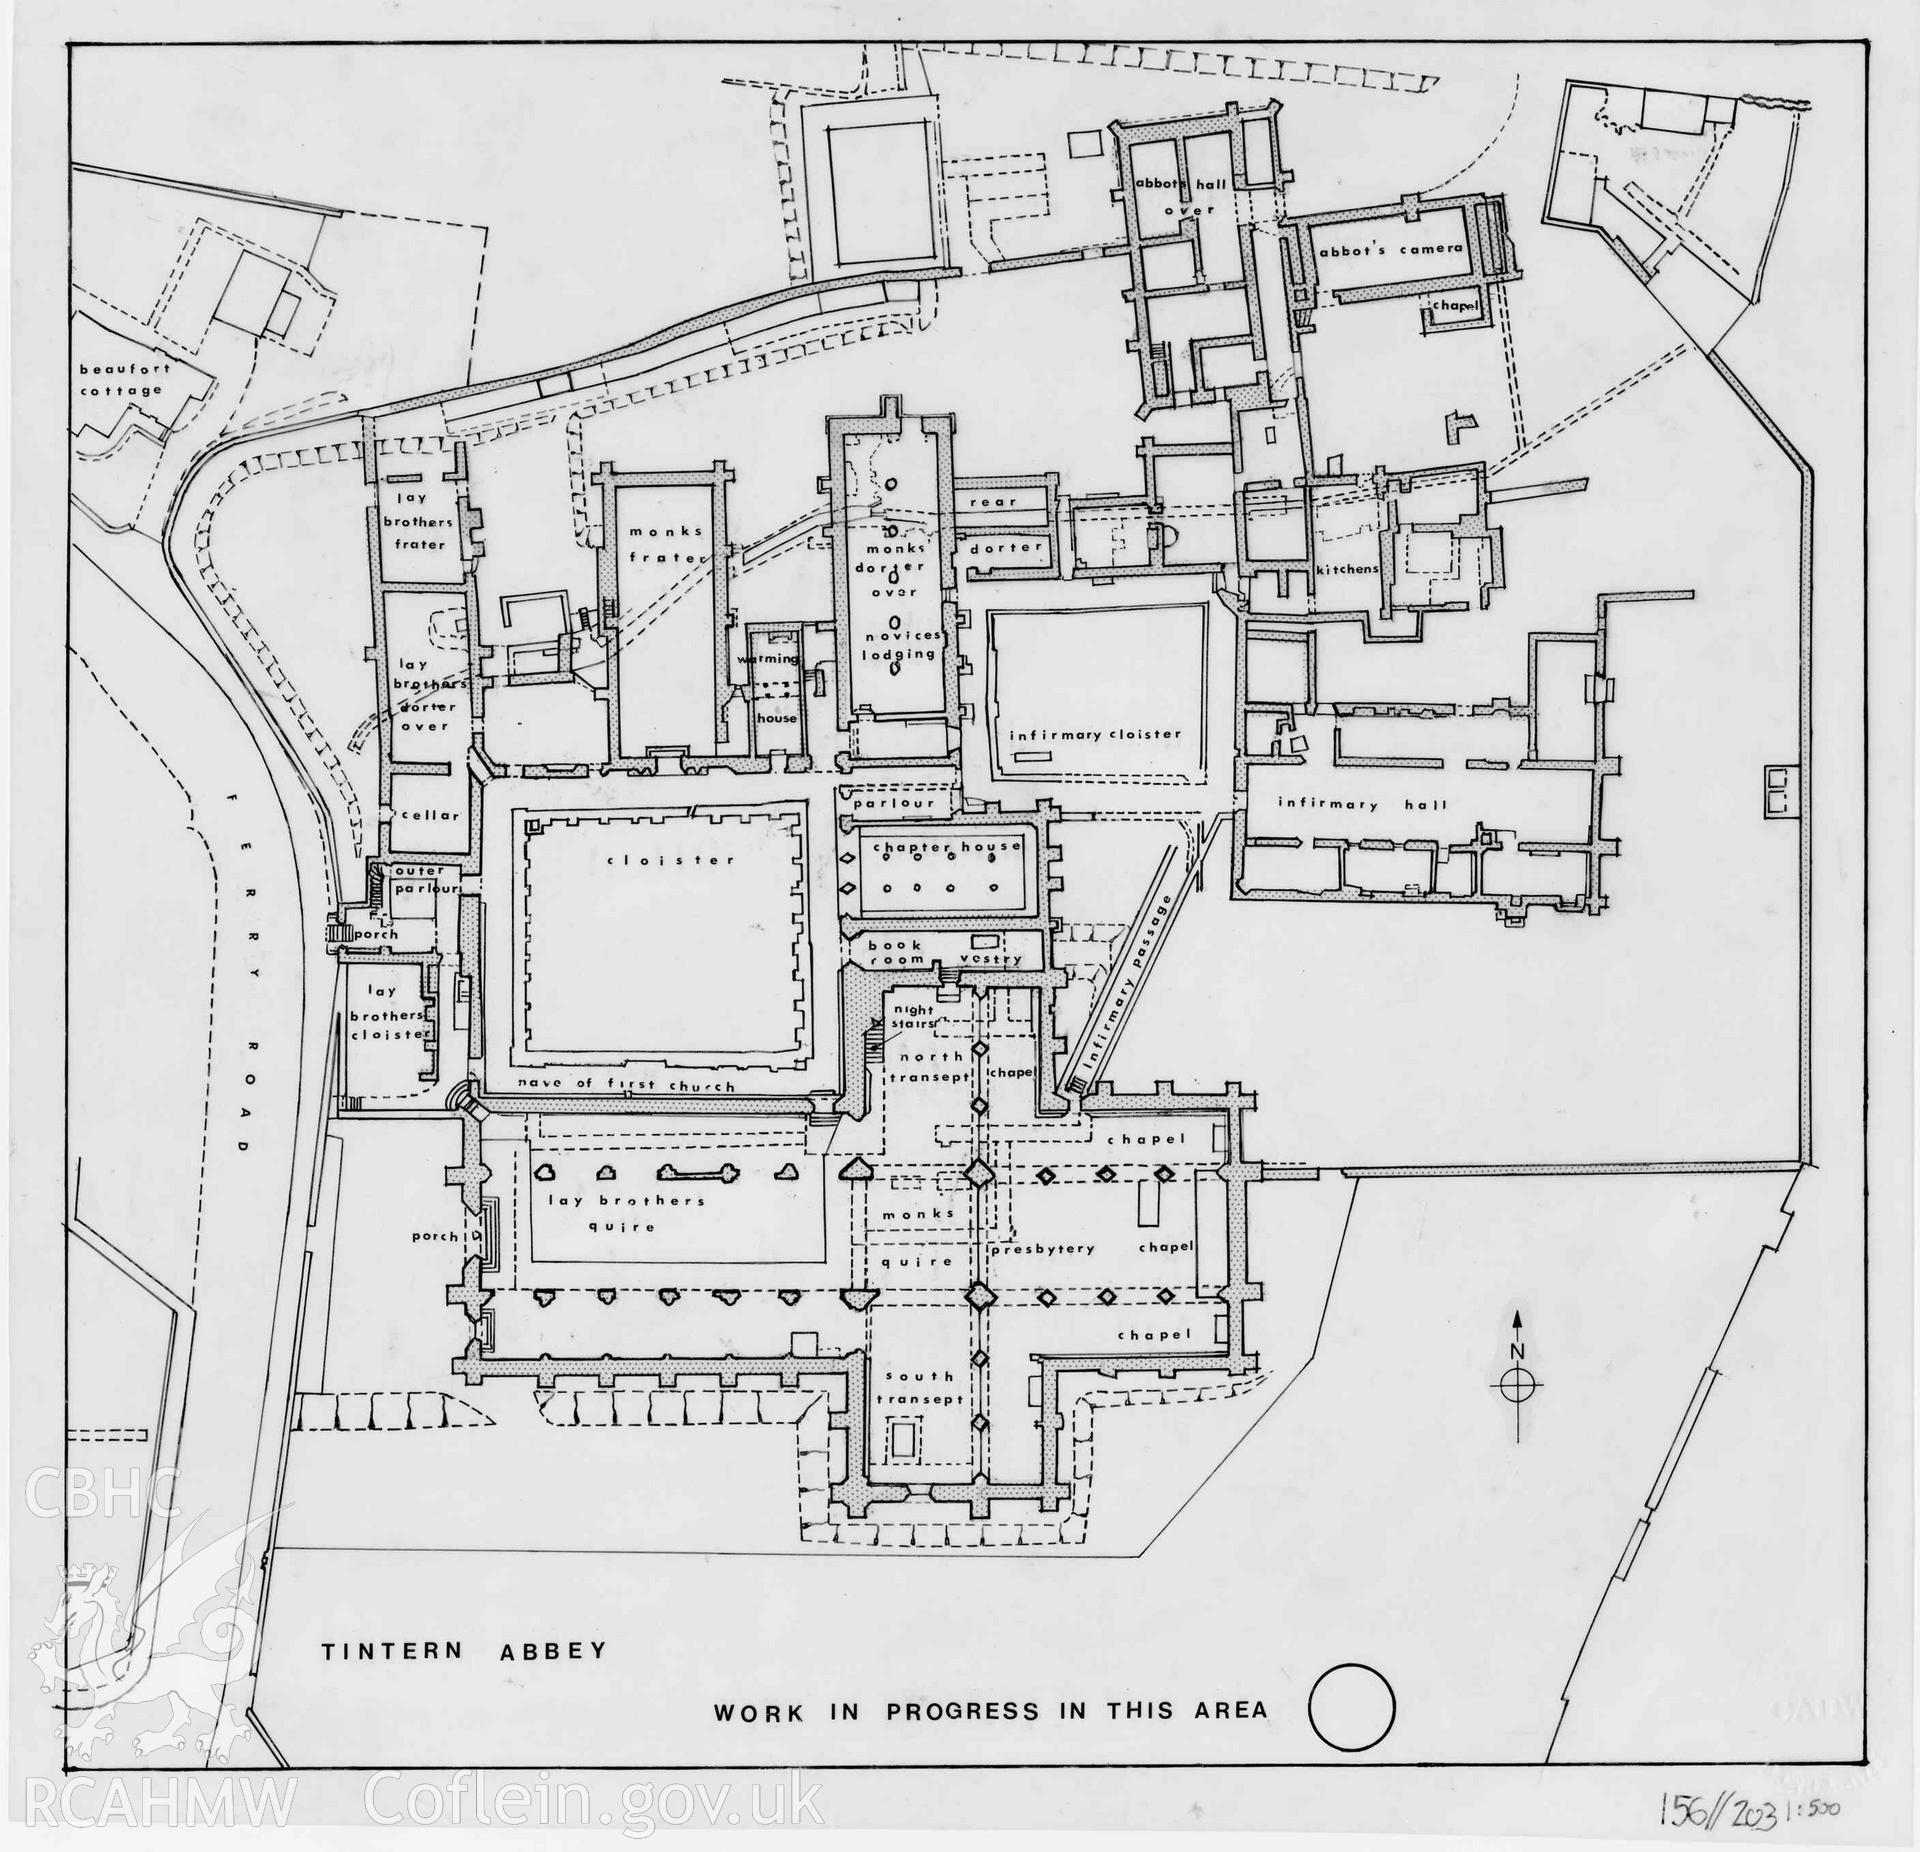 Cadw guardianship monument drawing, record plan, negative, Tintern Abbey.